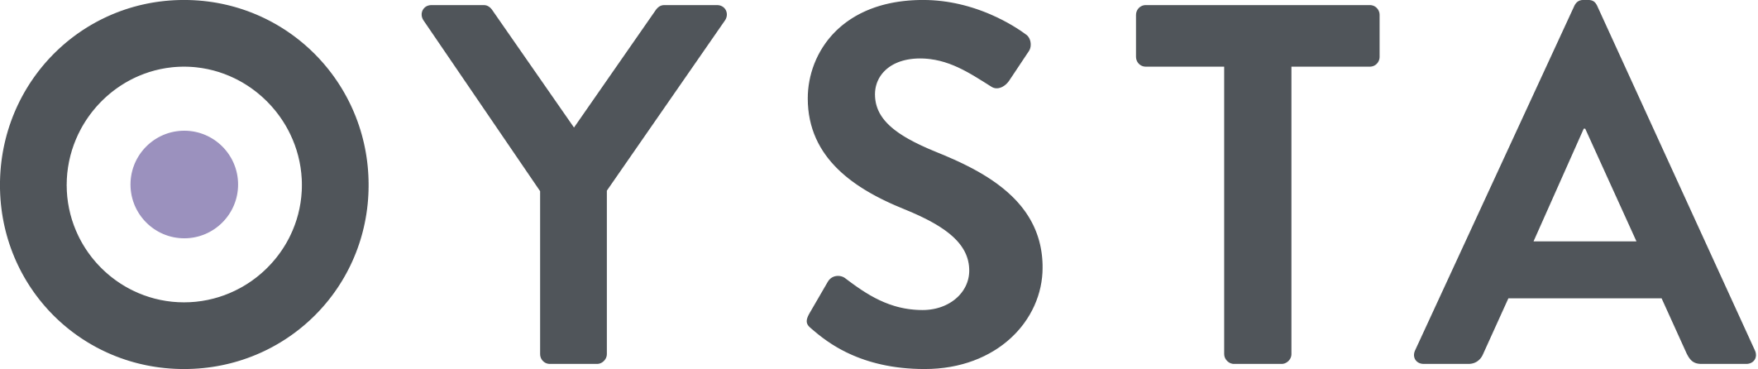 Tiefenbacher Group autism OYSTA Logo